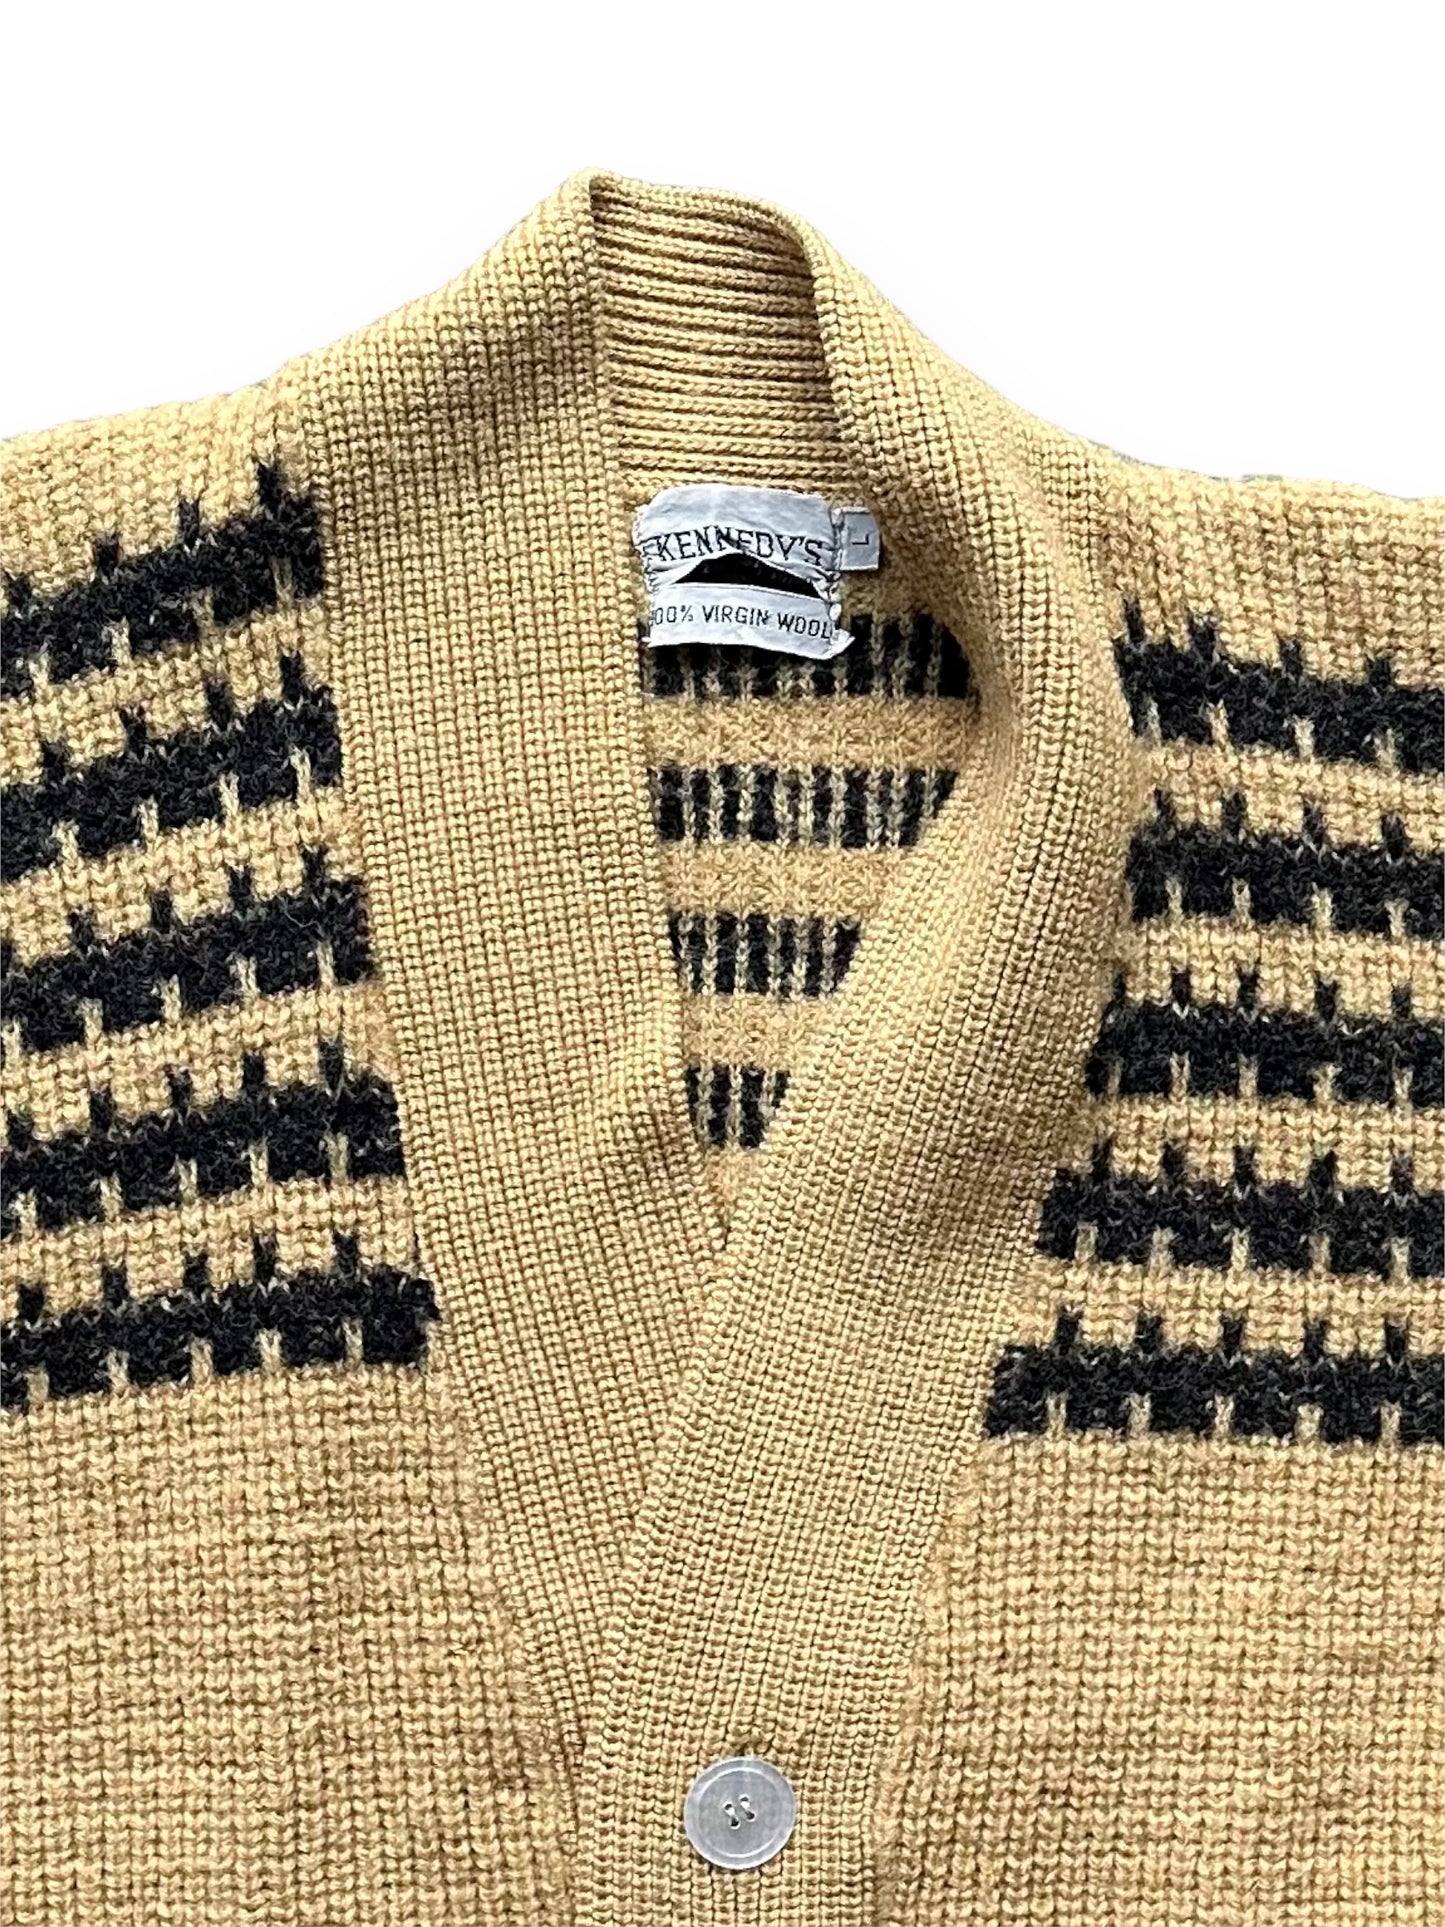 Tag View of Vintage Kennedys Wool Sweater SZ L | Vintage Cardigan Sweaters Seattle | Barn Owl Vintage Seattle